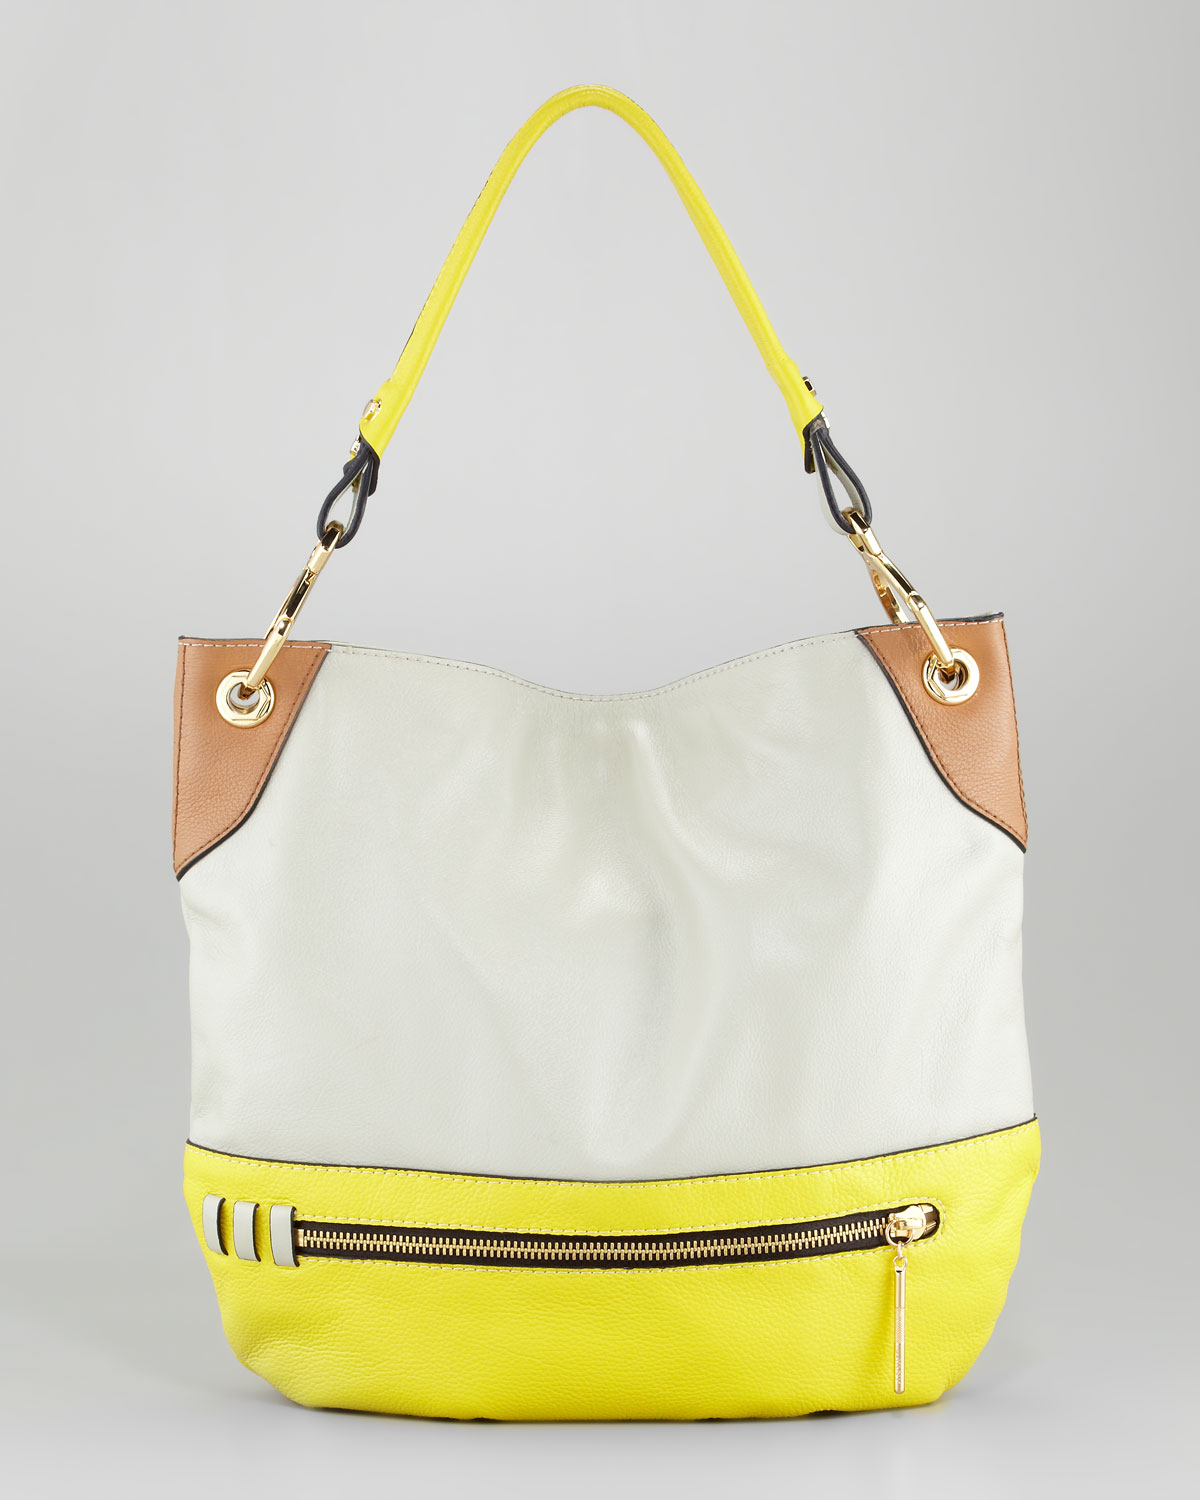 Lyst - Oryany Whitney Colorblock Shoulder Bag Multi in White